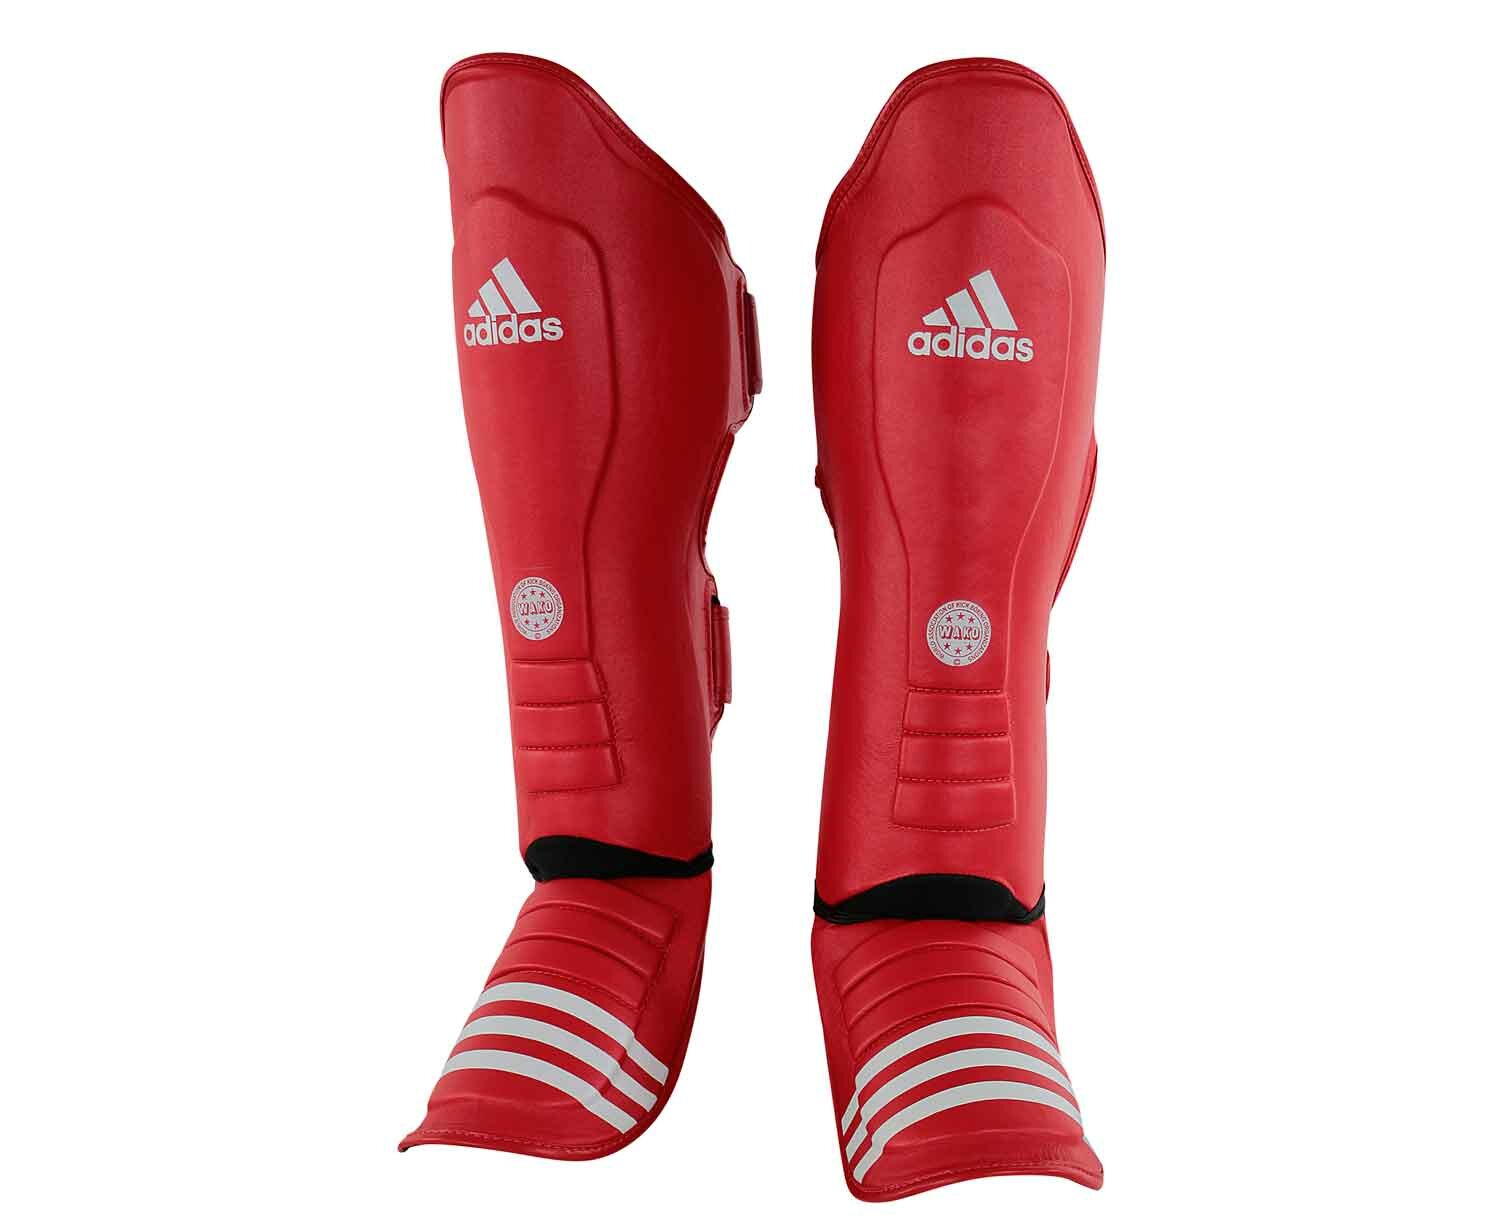 Защита голени-стопы: Защита голеностопа Adidas WAKO Super Pro Shin Instep Guards красная, размер M, артикул adiWAKOGSS11 (Размер: M)